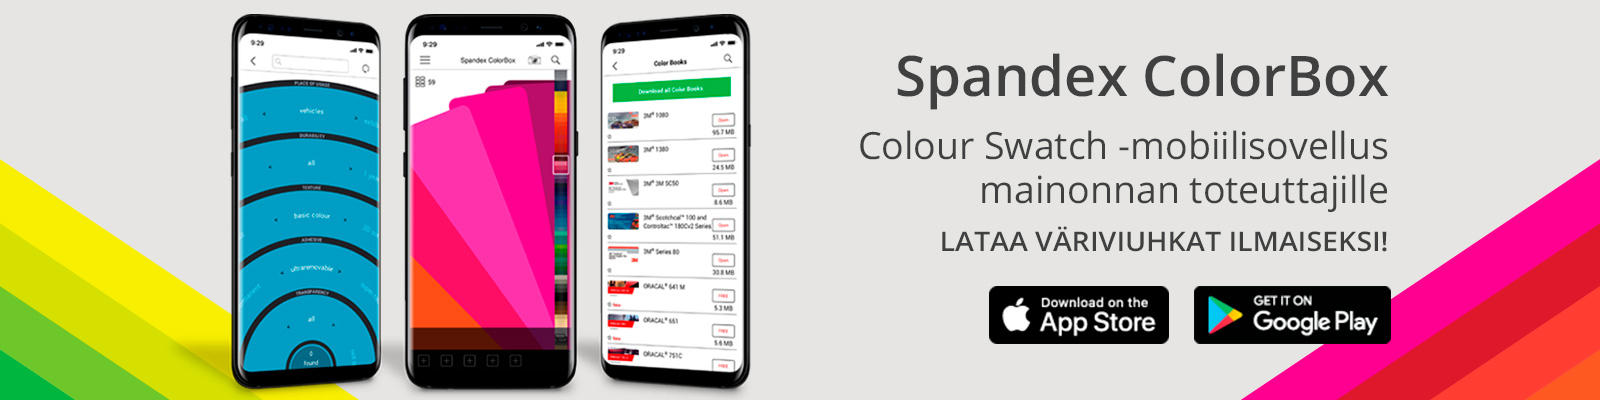 Lataa Spandex ColorBox -sovellus